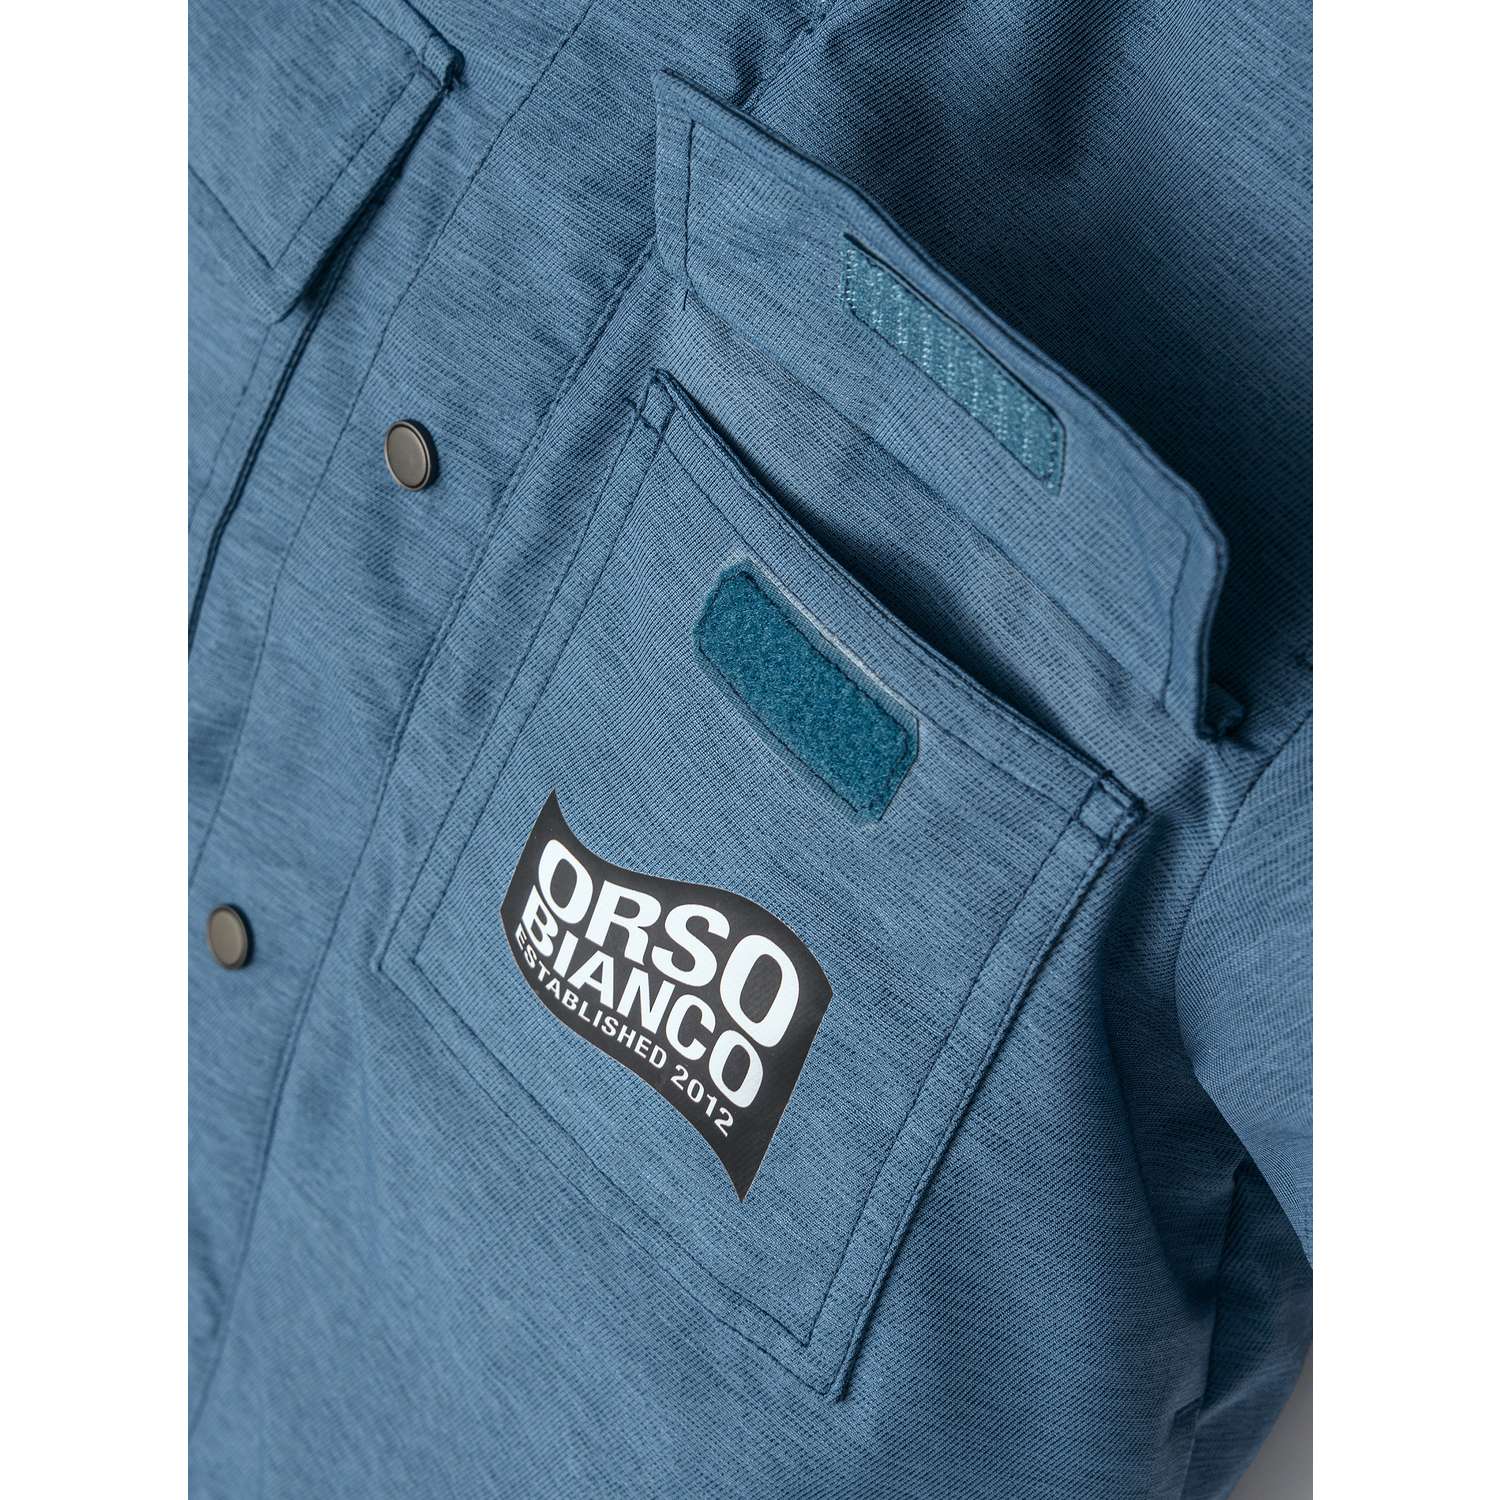 Куртка Orso Bianco OB21076-22_джинсовый меланж - фото 5